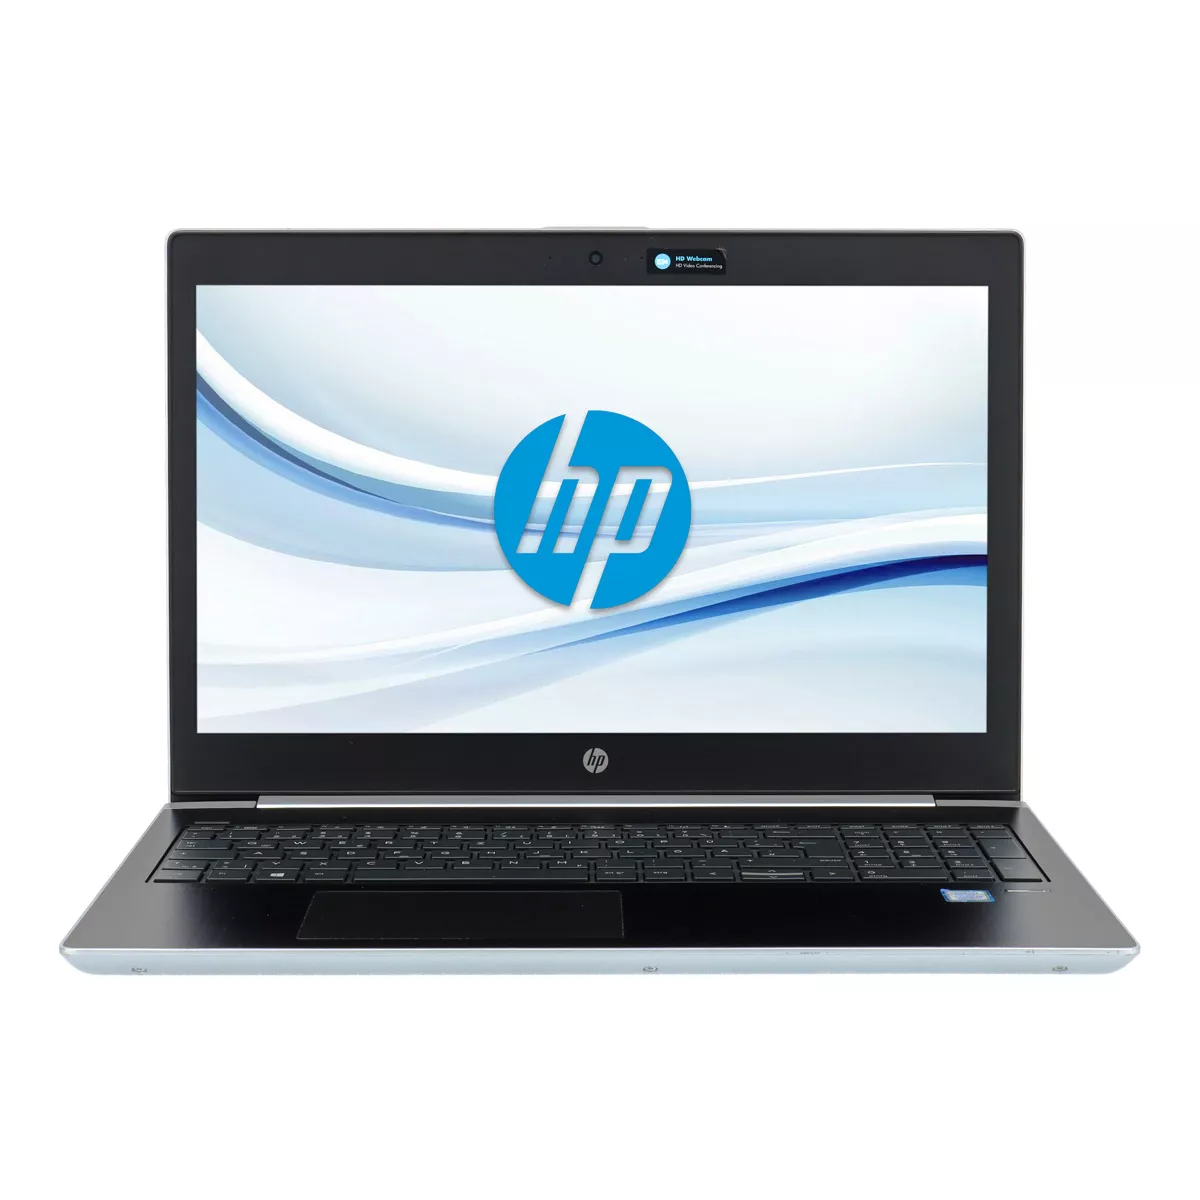 HP ProBook 440 G5 Core i5 8250U 8 GB 500 GB SSD Webcam B